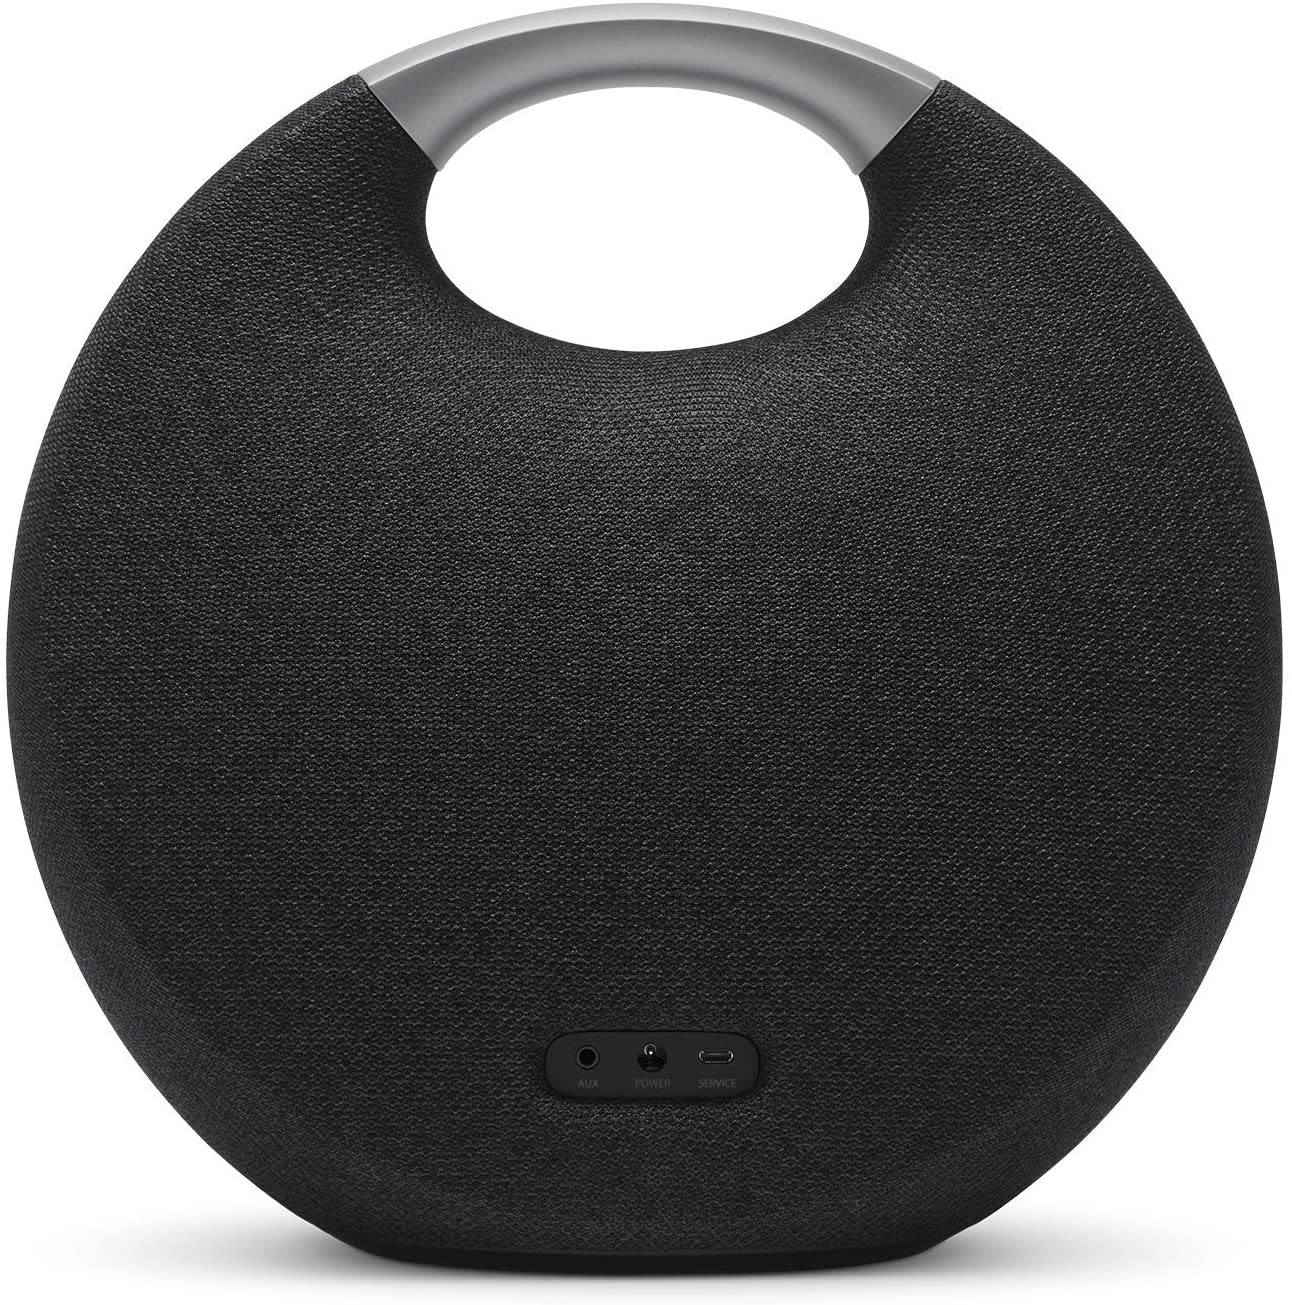 Harmon Kardon HKOS6BLKAM-Z Onyx Studio 6 Bluetooth Speaker Black - Refurbished